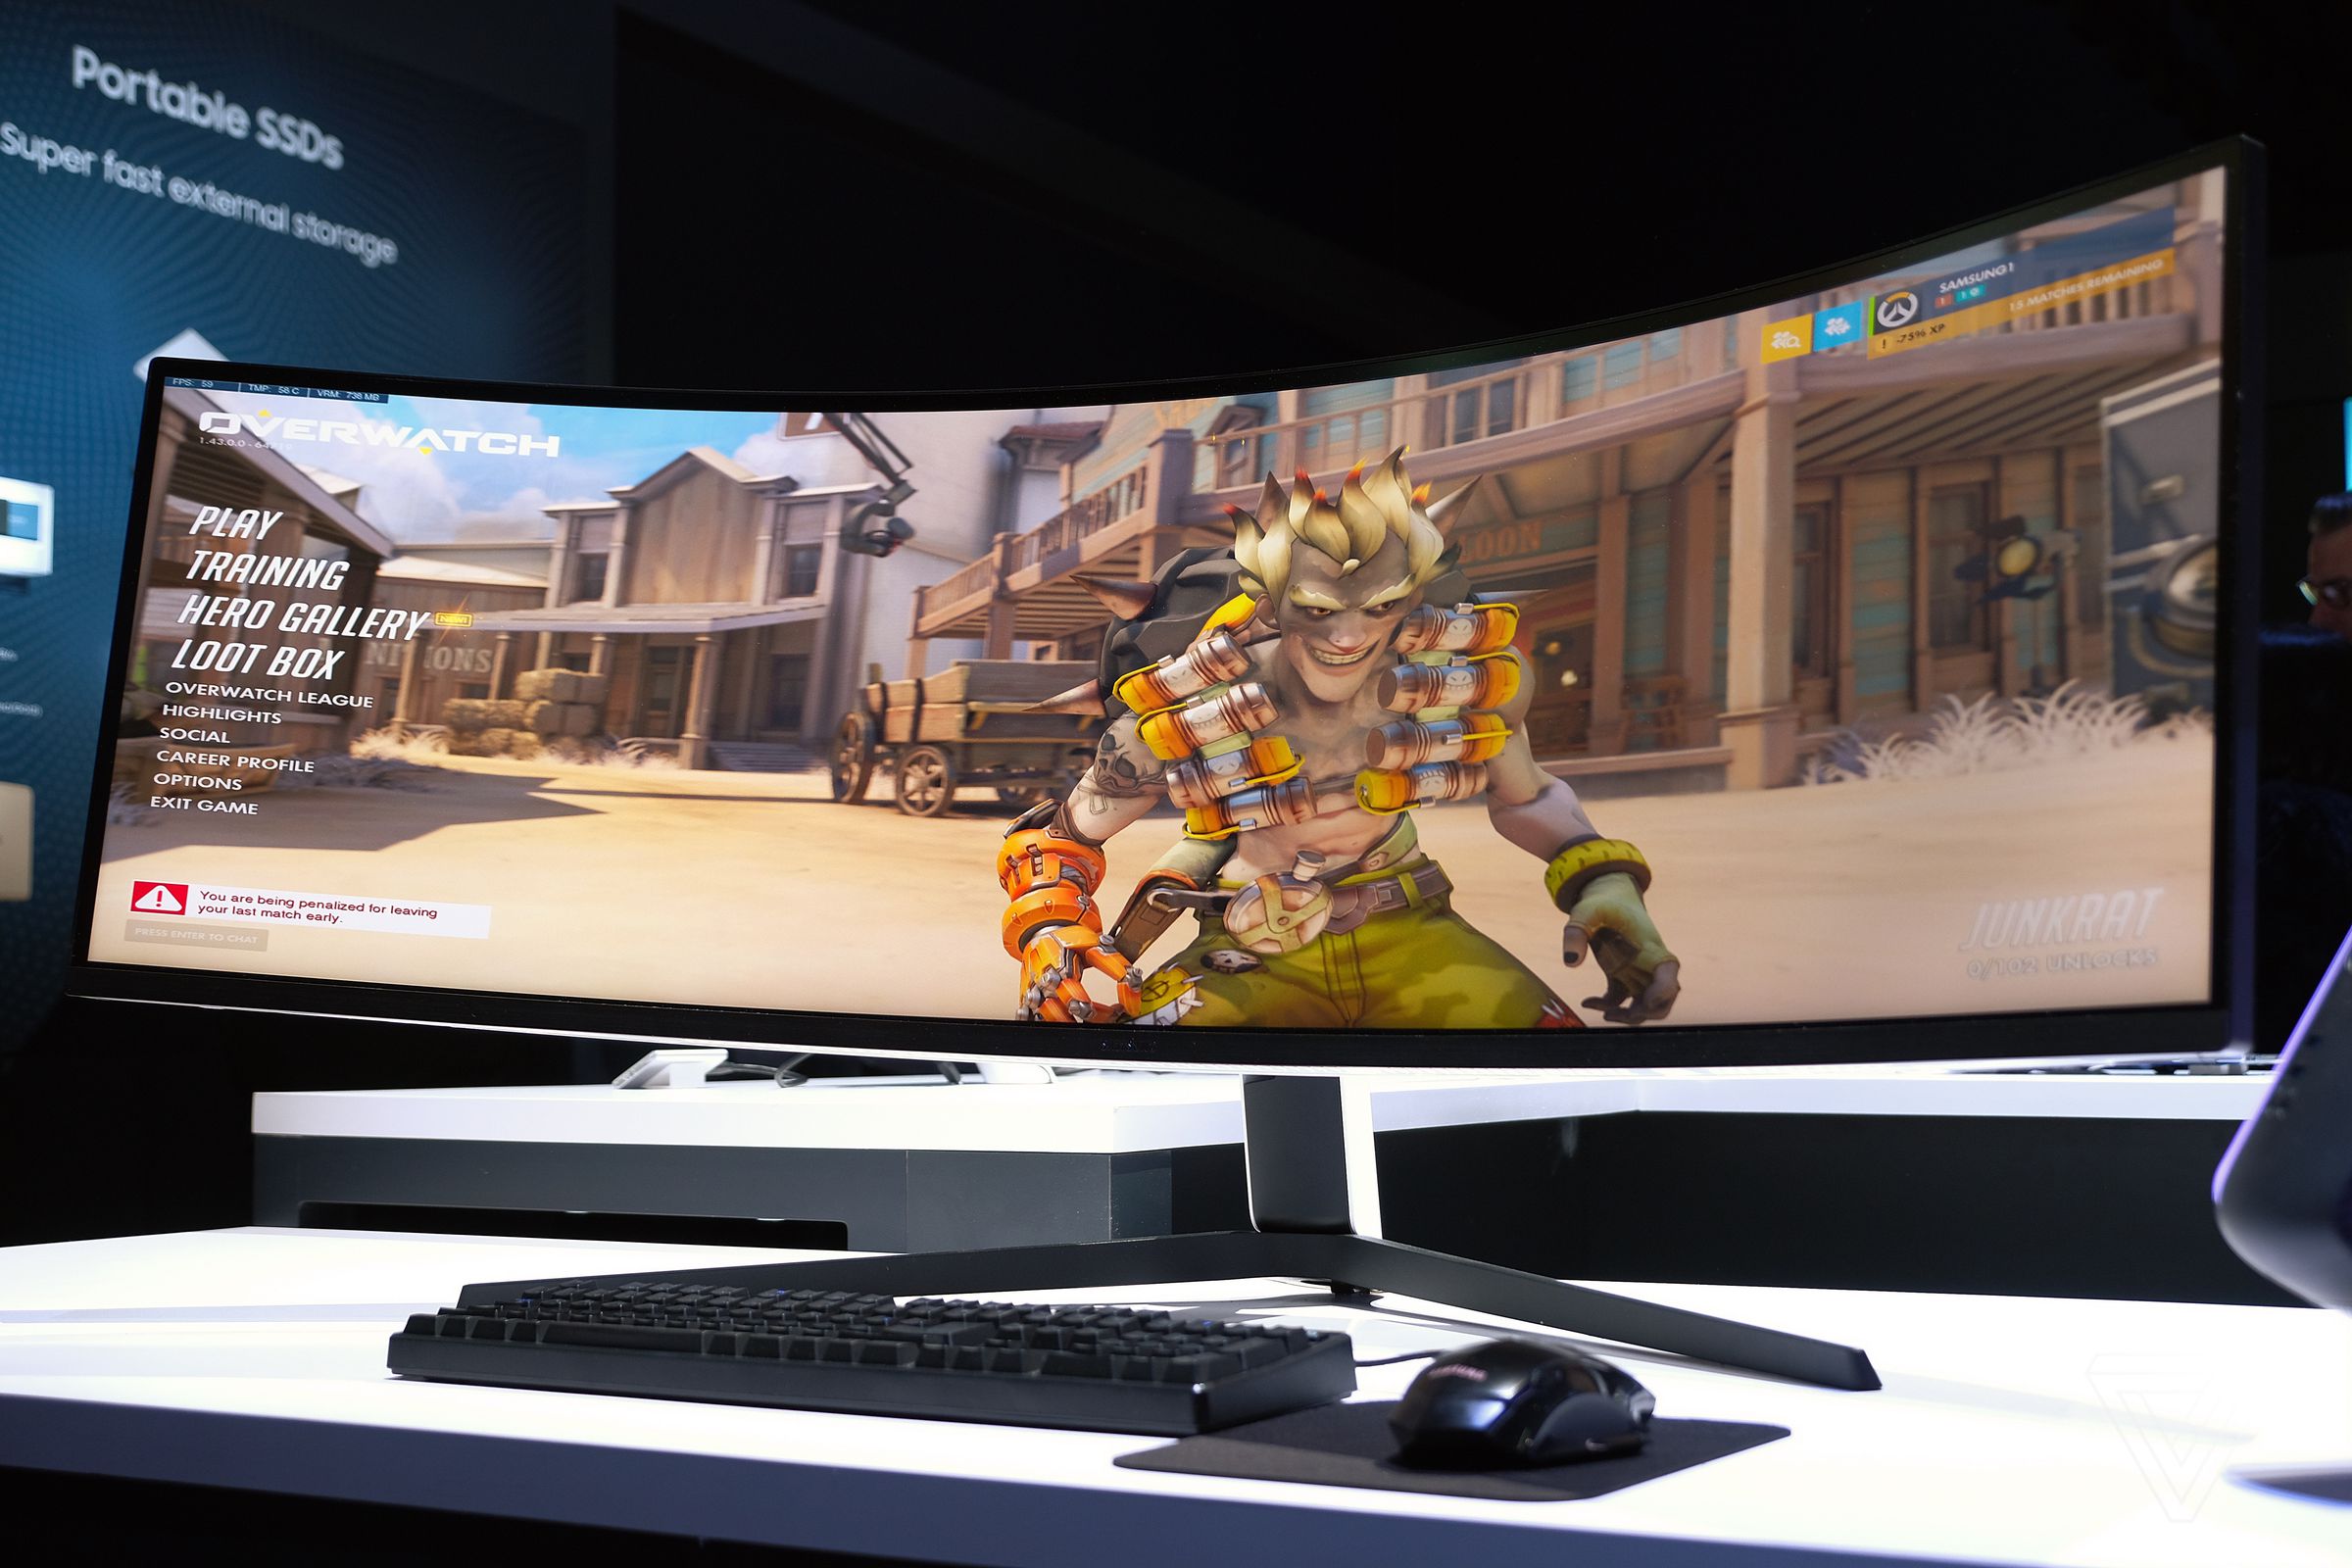 The 49-inch Samsung Odyssey G9 gaming monitor